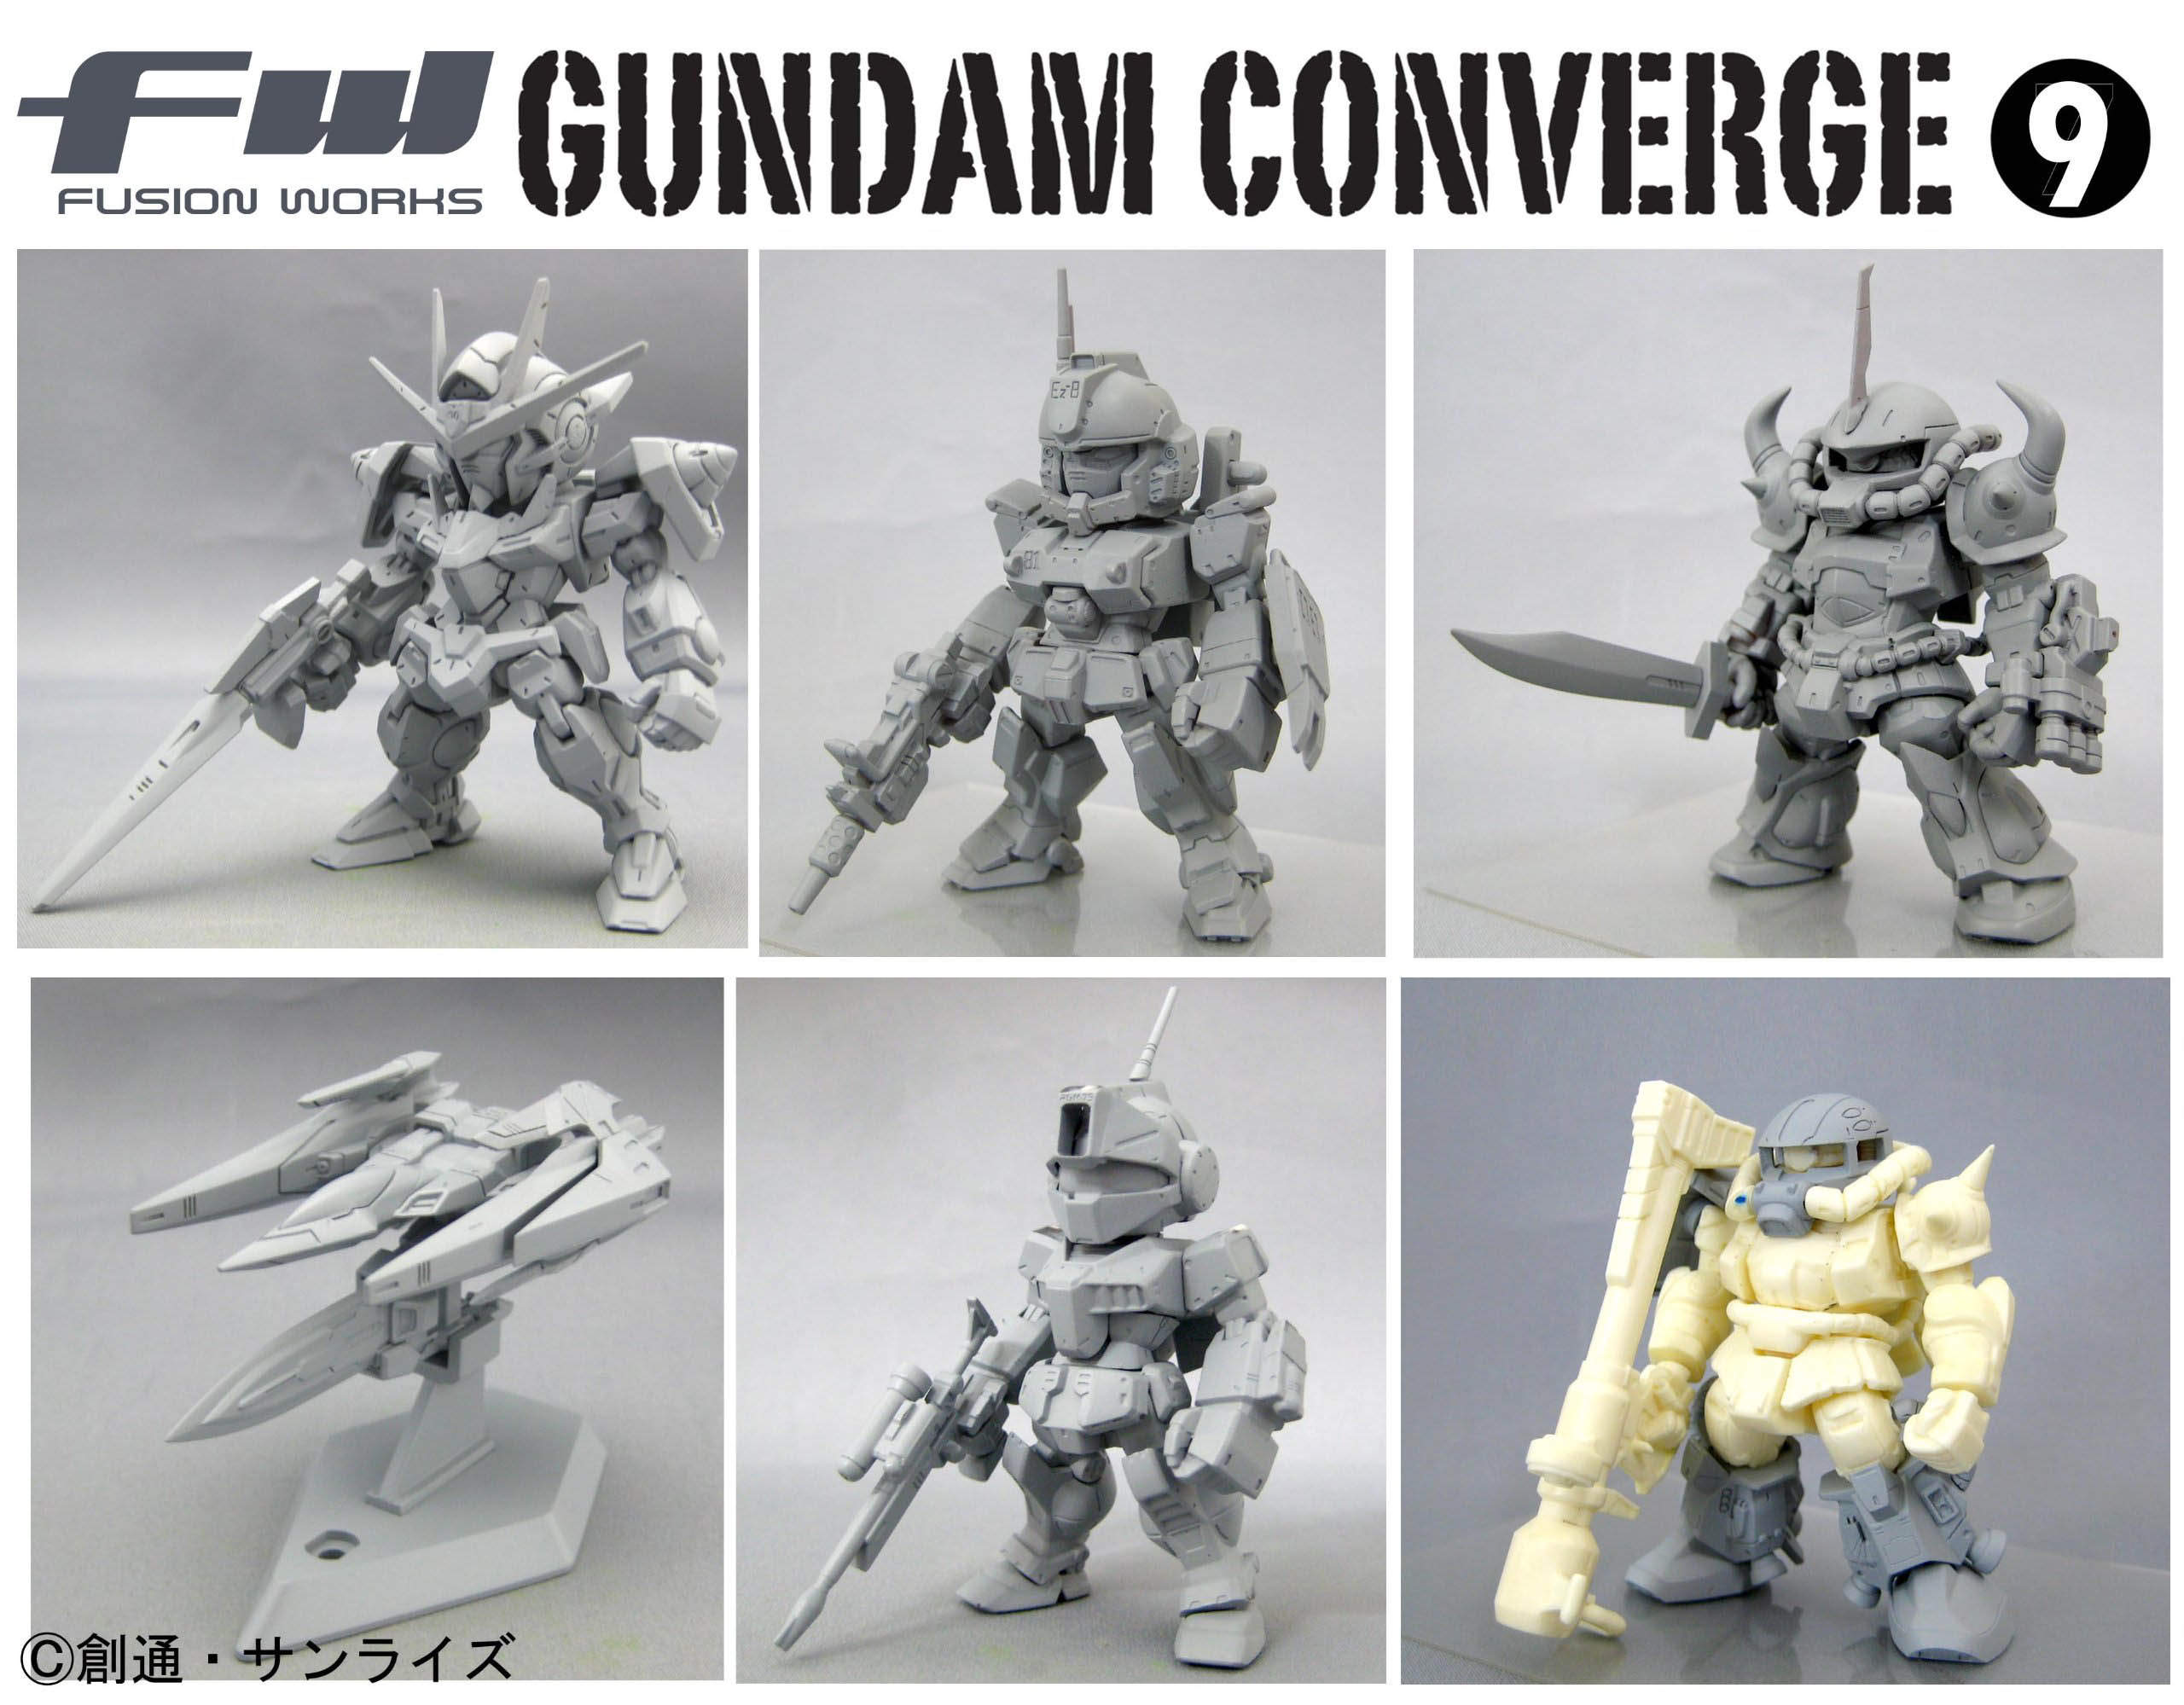 FW Gundam CONVERGE 9: Poster Size Promo Image